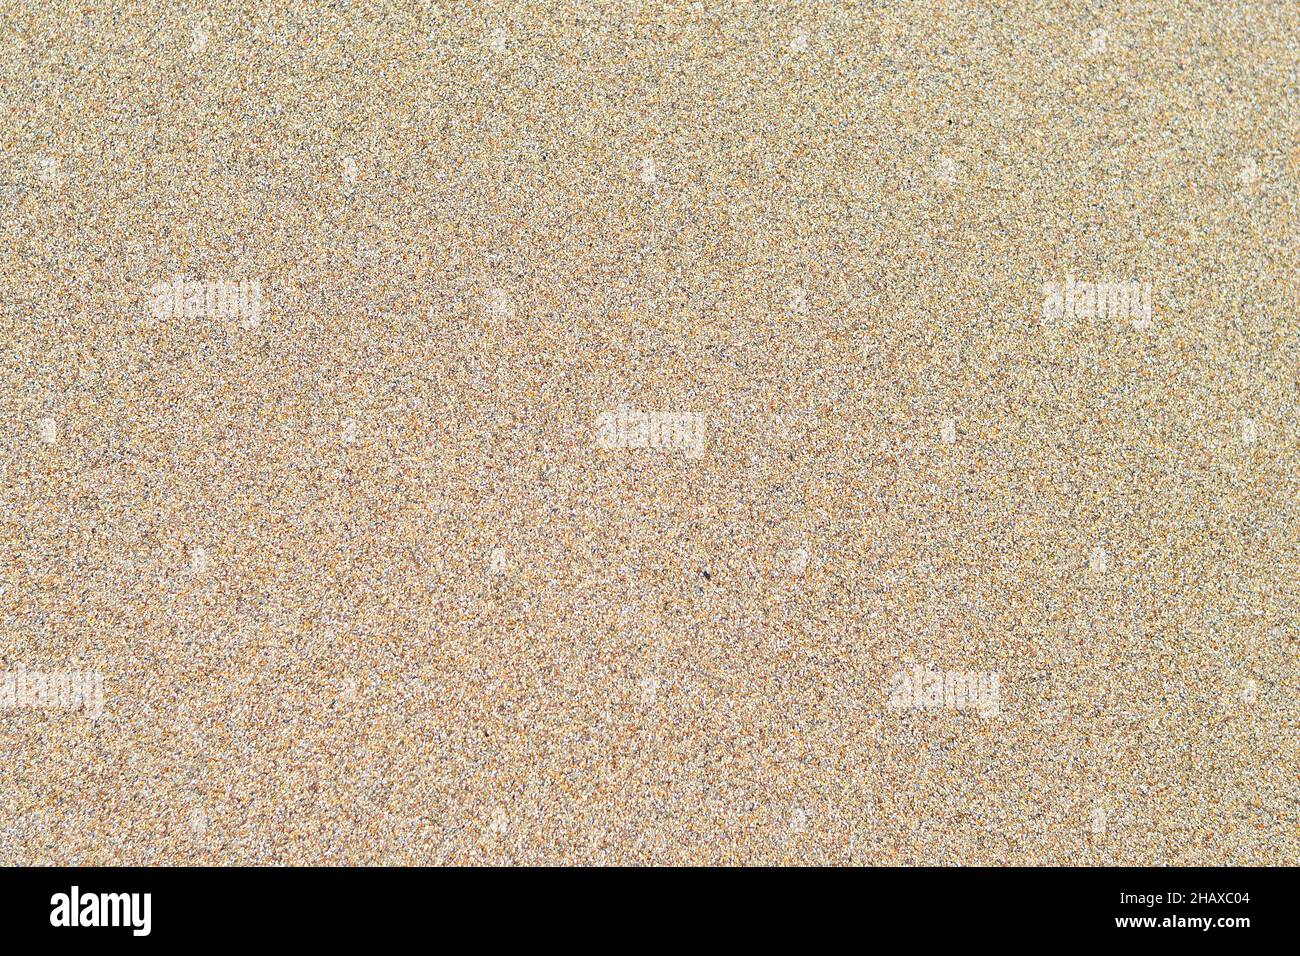 Full frame of sand texture Stock Photo